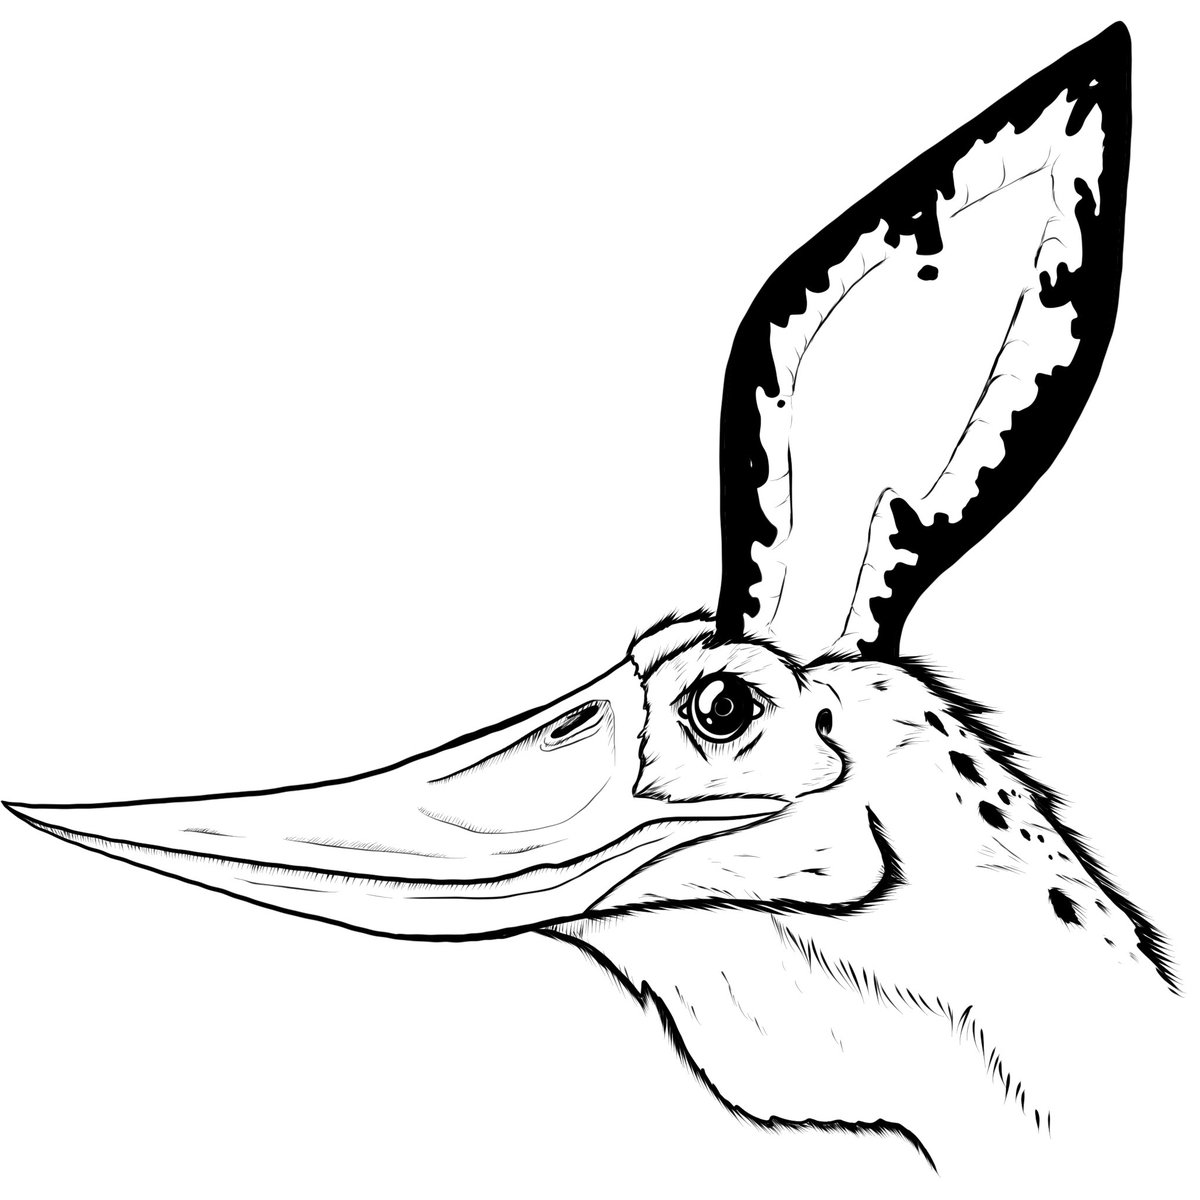 Pteranodon Sternbergi for day 21 of #dinosaurmonth #JurassicJune